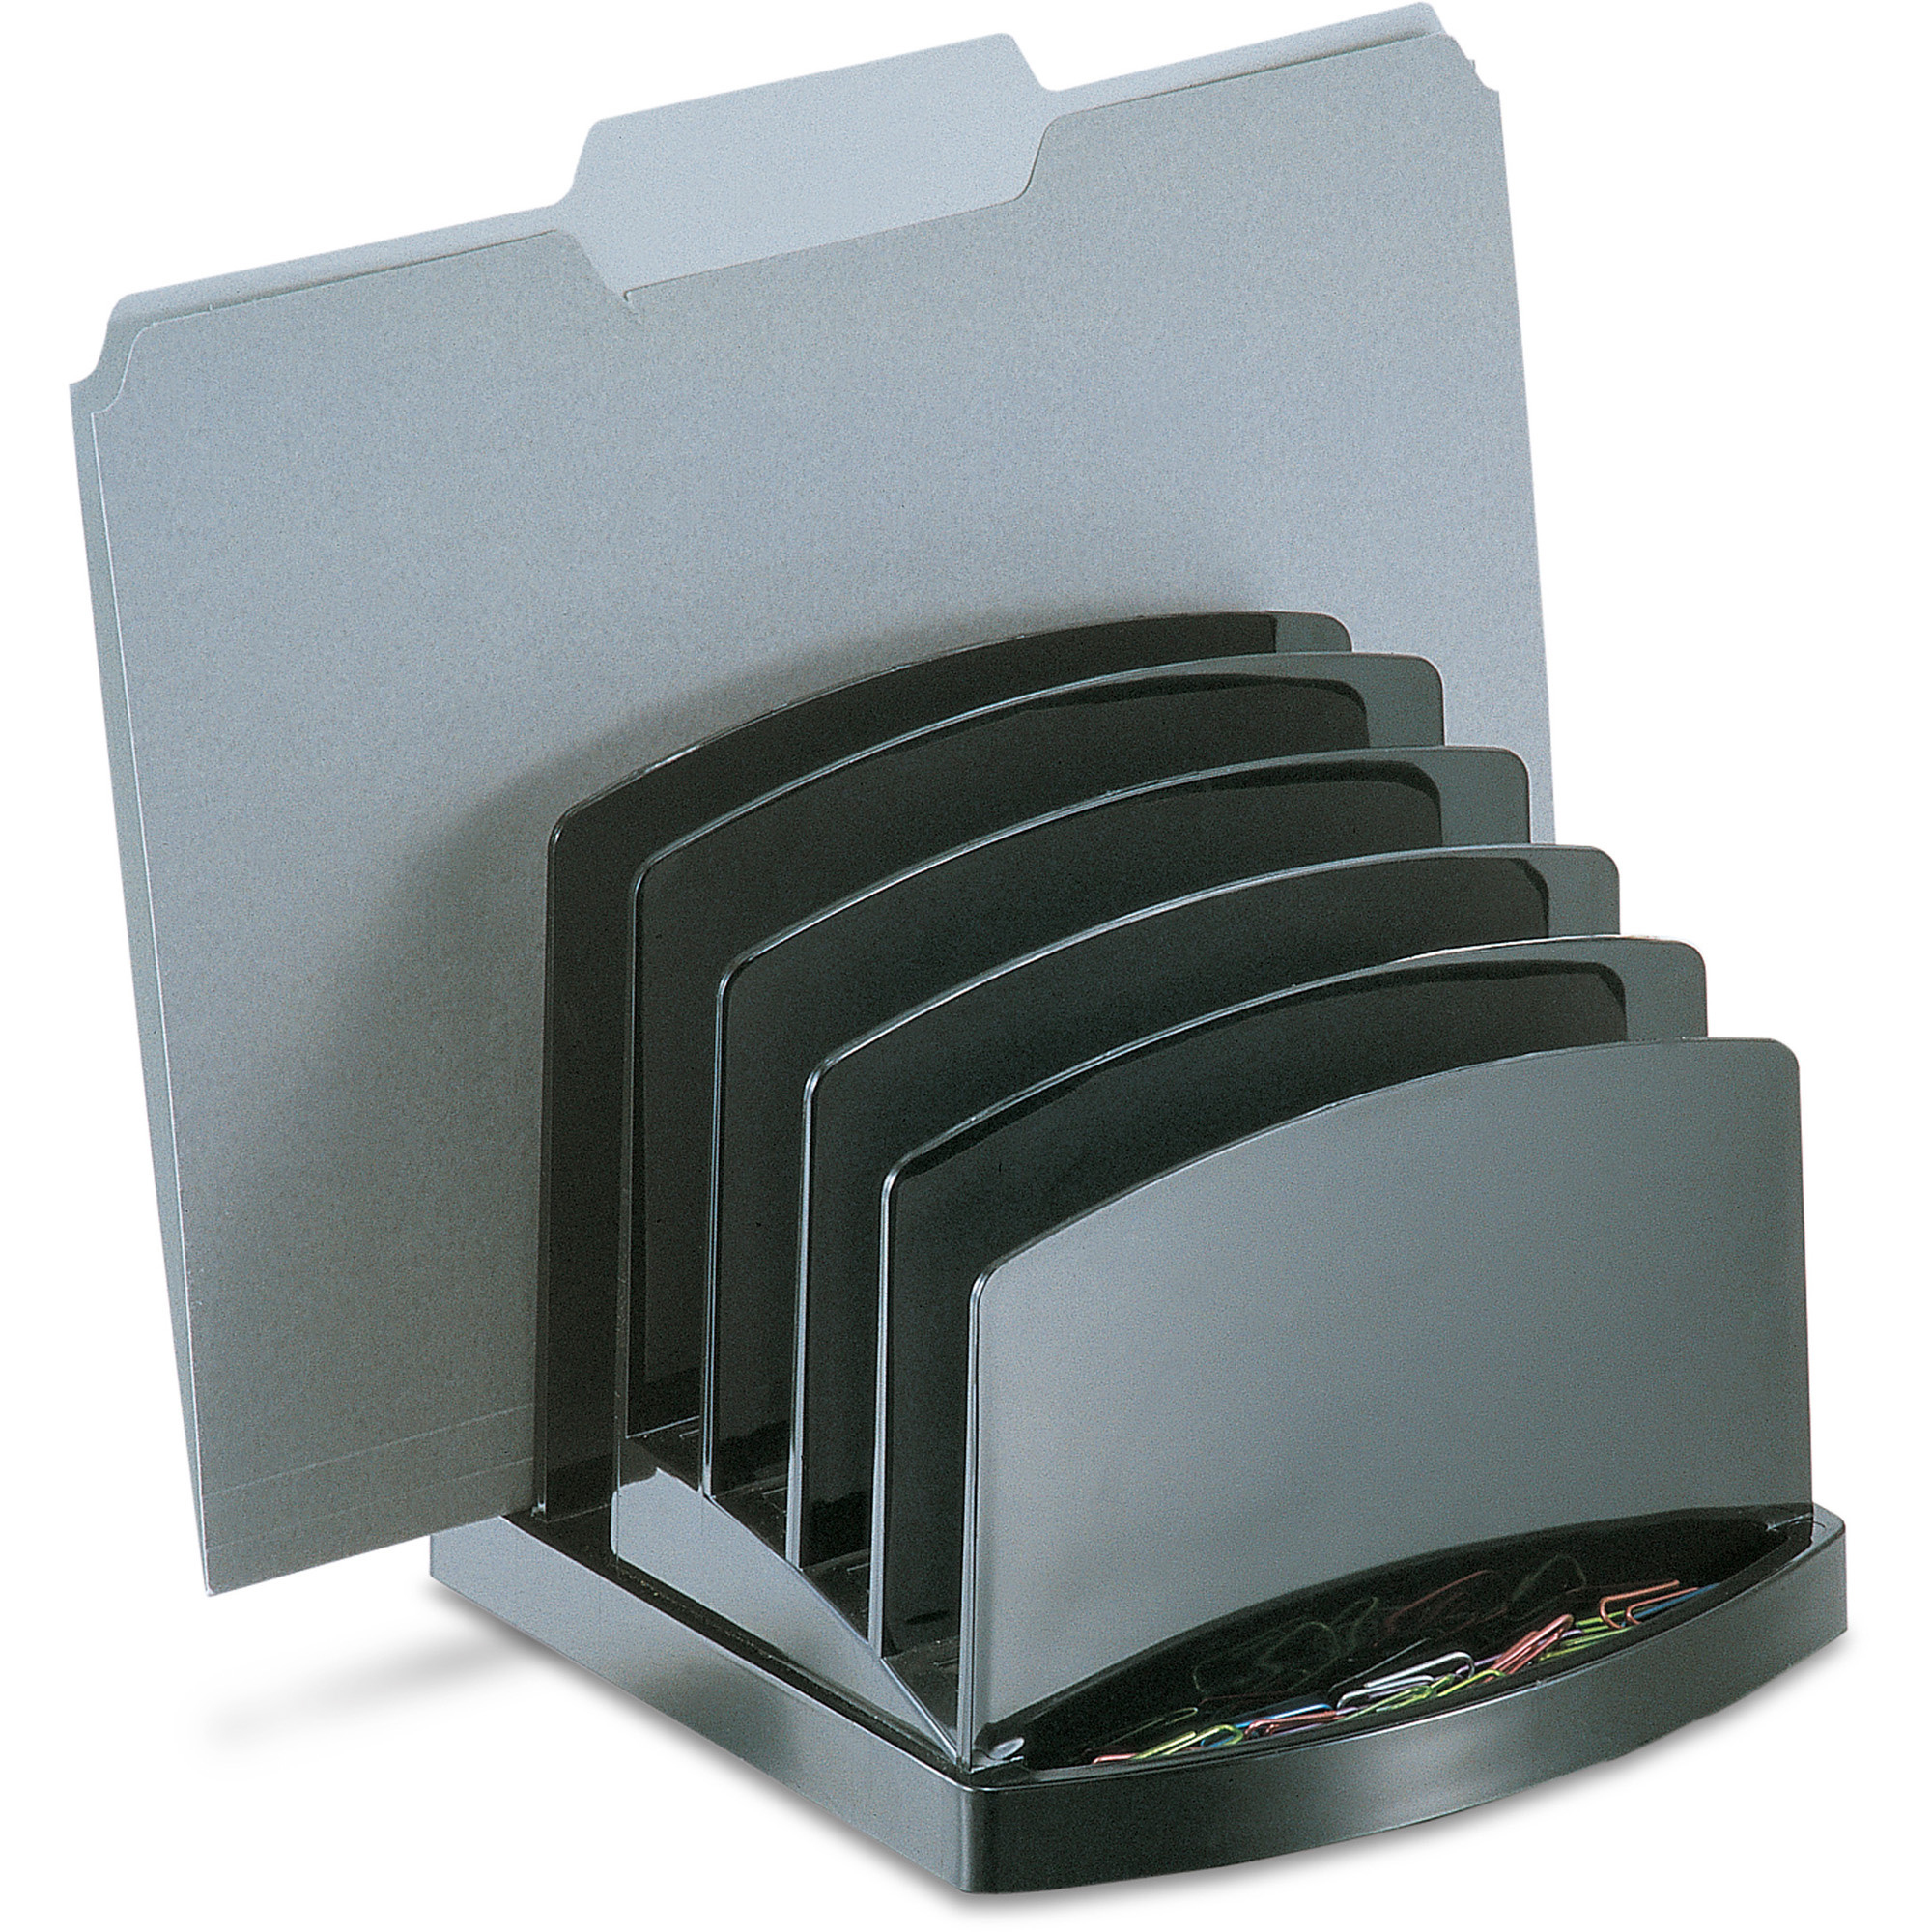 Officemate Incline Sorter, 6 Compartments, Black Plastic